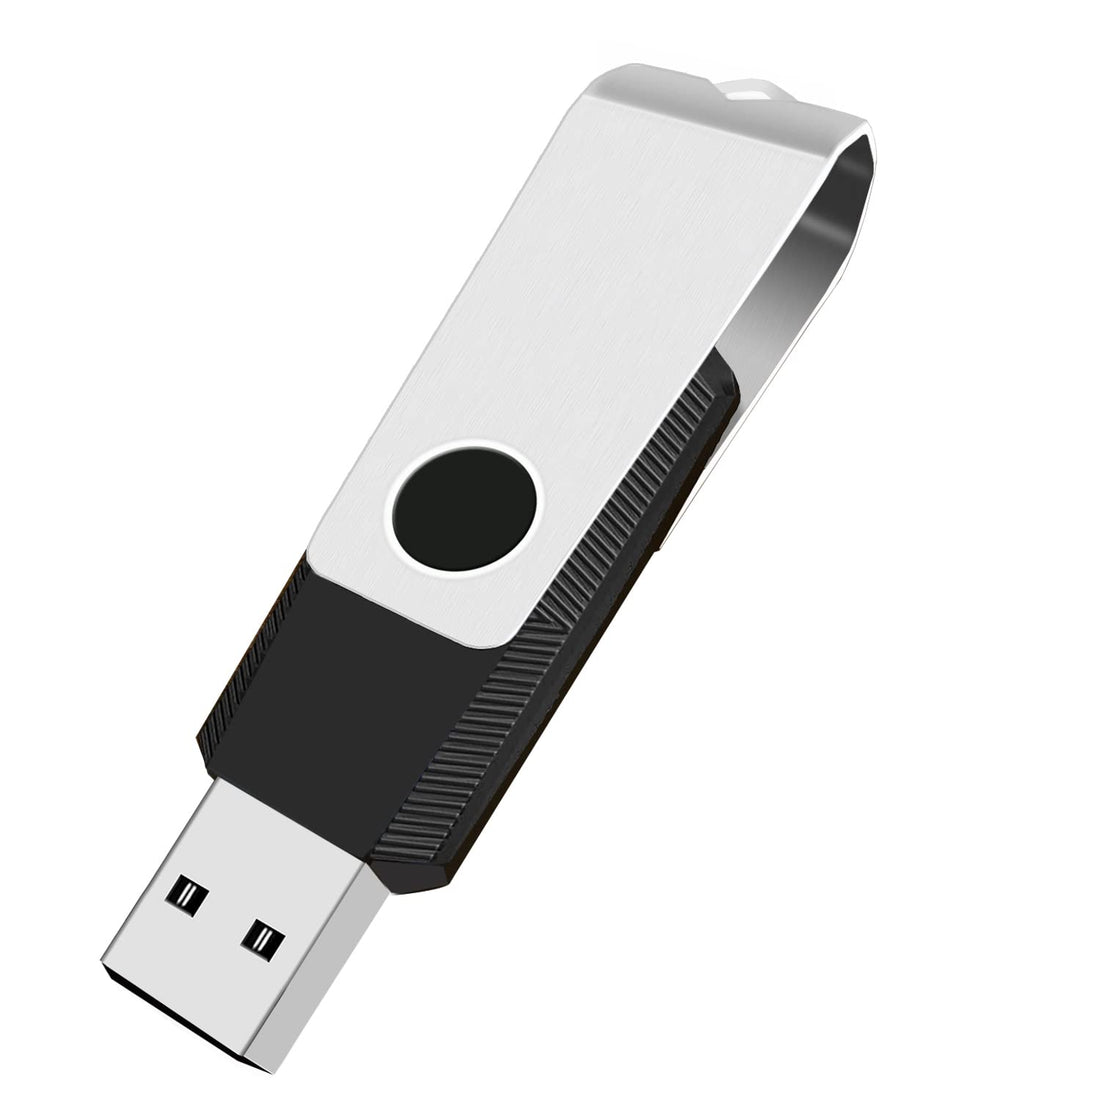 2GB Flash Drive Wooolken USB Flash Drive Thumb Drive Zip Drive USB 2.0 Memory Stick Jump Pen Drive for Portable Data Storage